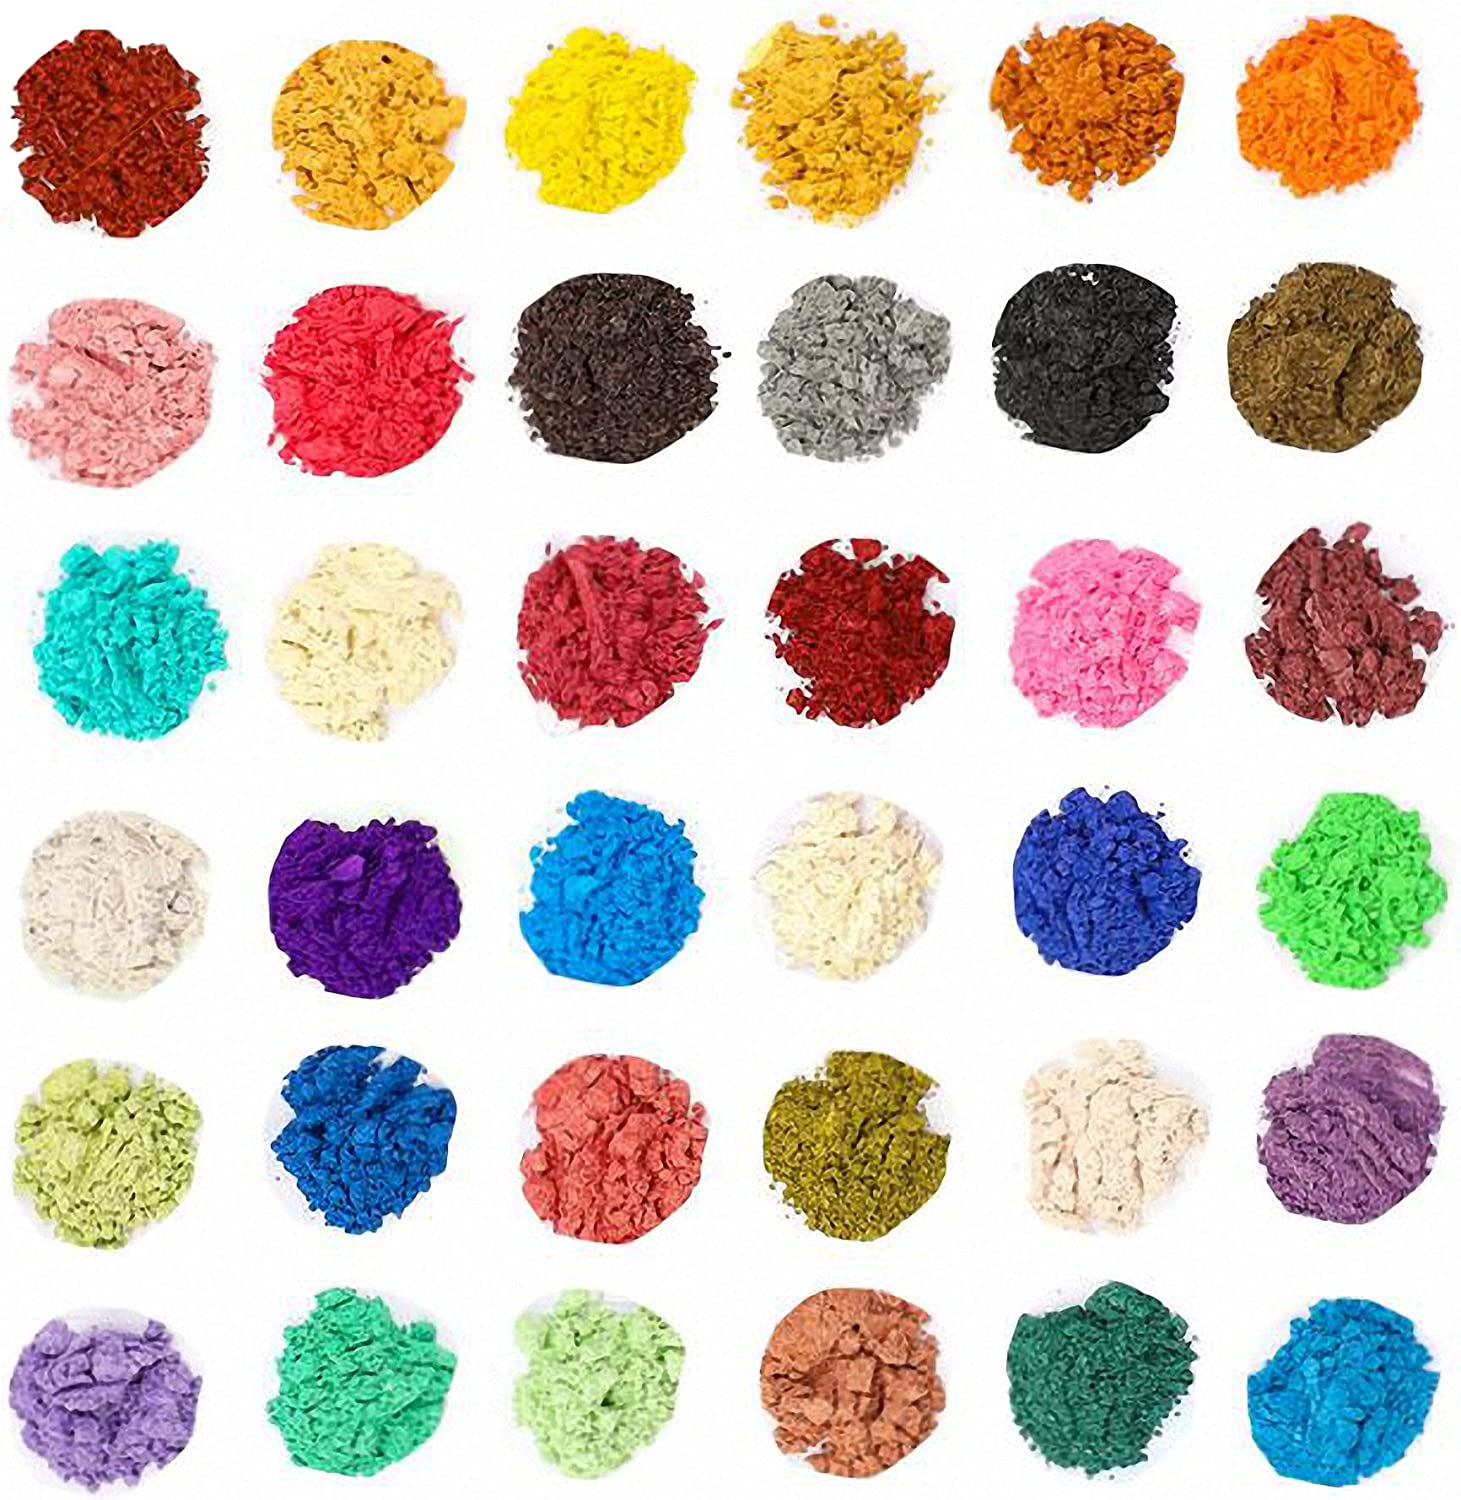 Mica Powder,Natural Soap Making Supplies,Resin Pigment Kit,Epoxy Resin Dye,36 Colors Soap Making Dyes,Hand Soap Making Pigment Kit,Resin Jewelry